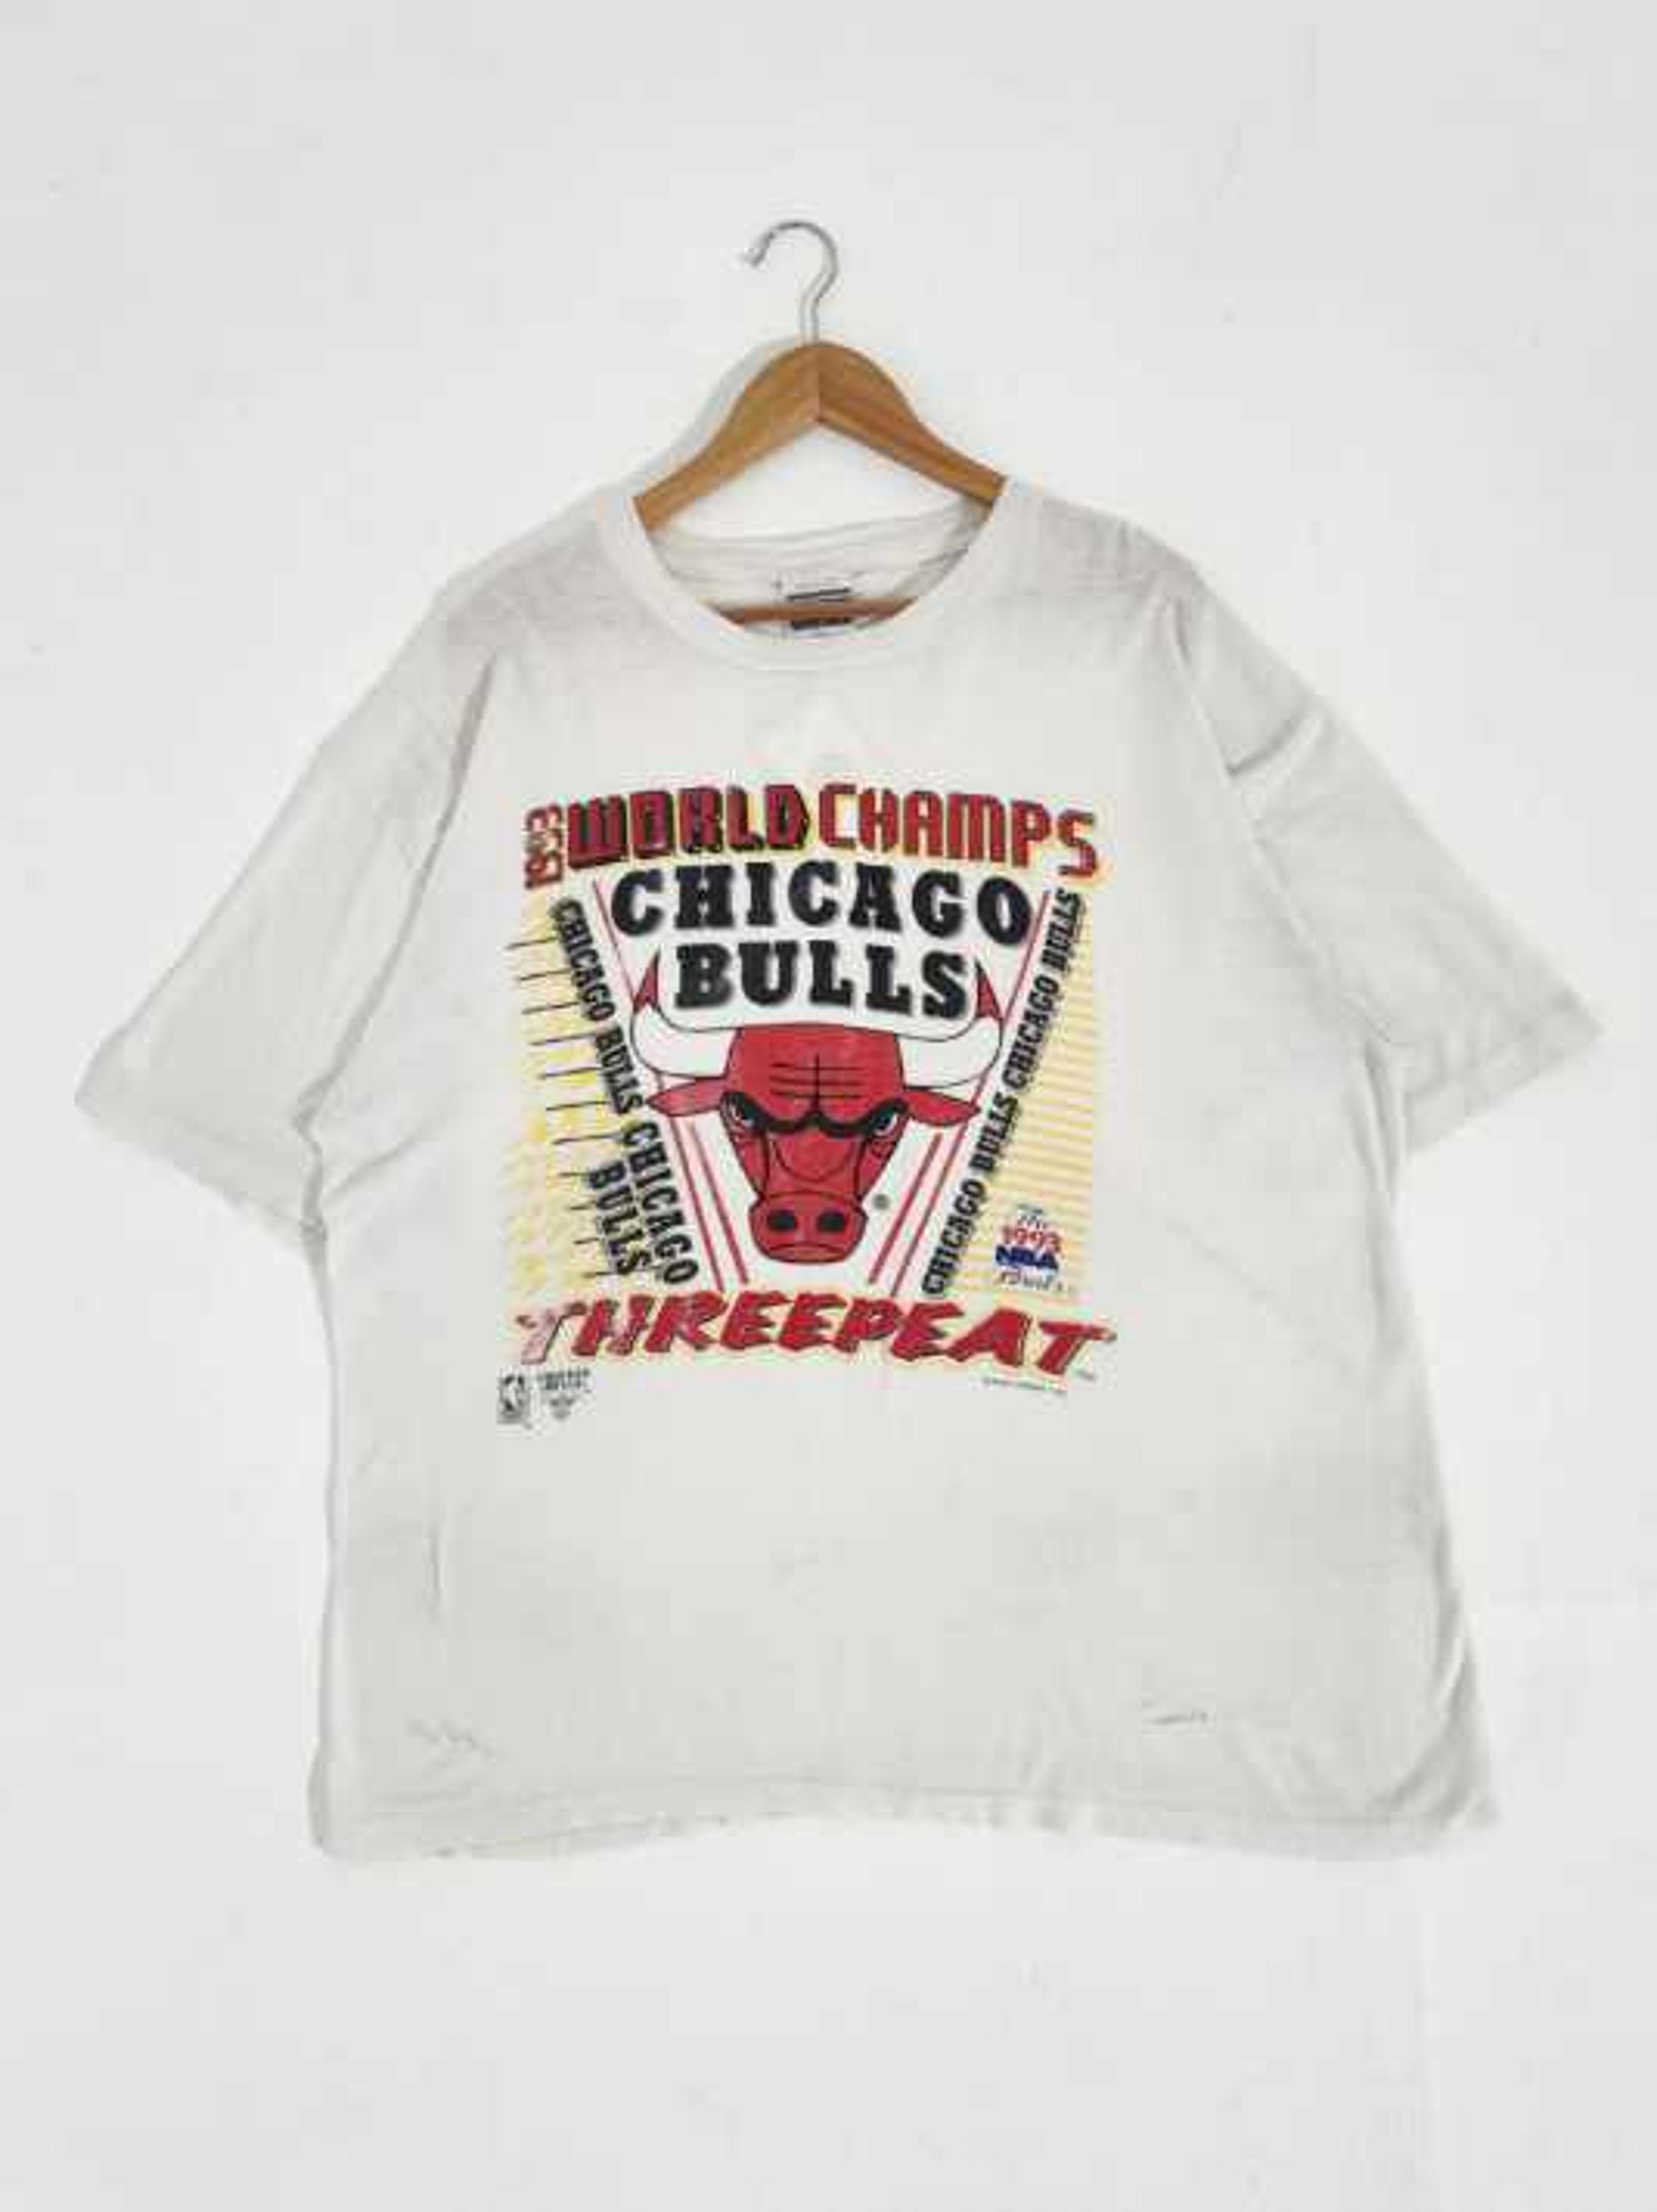 Vintage Chicago Bulls 3-Peat Red T-Shirt Sz. L